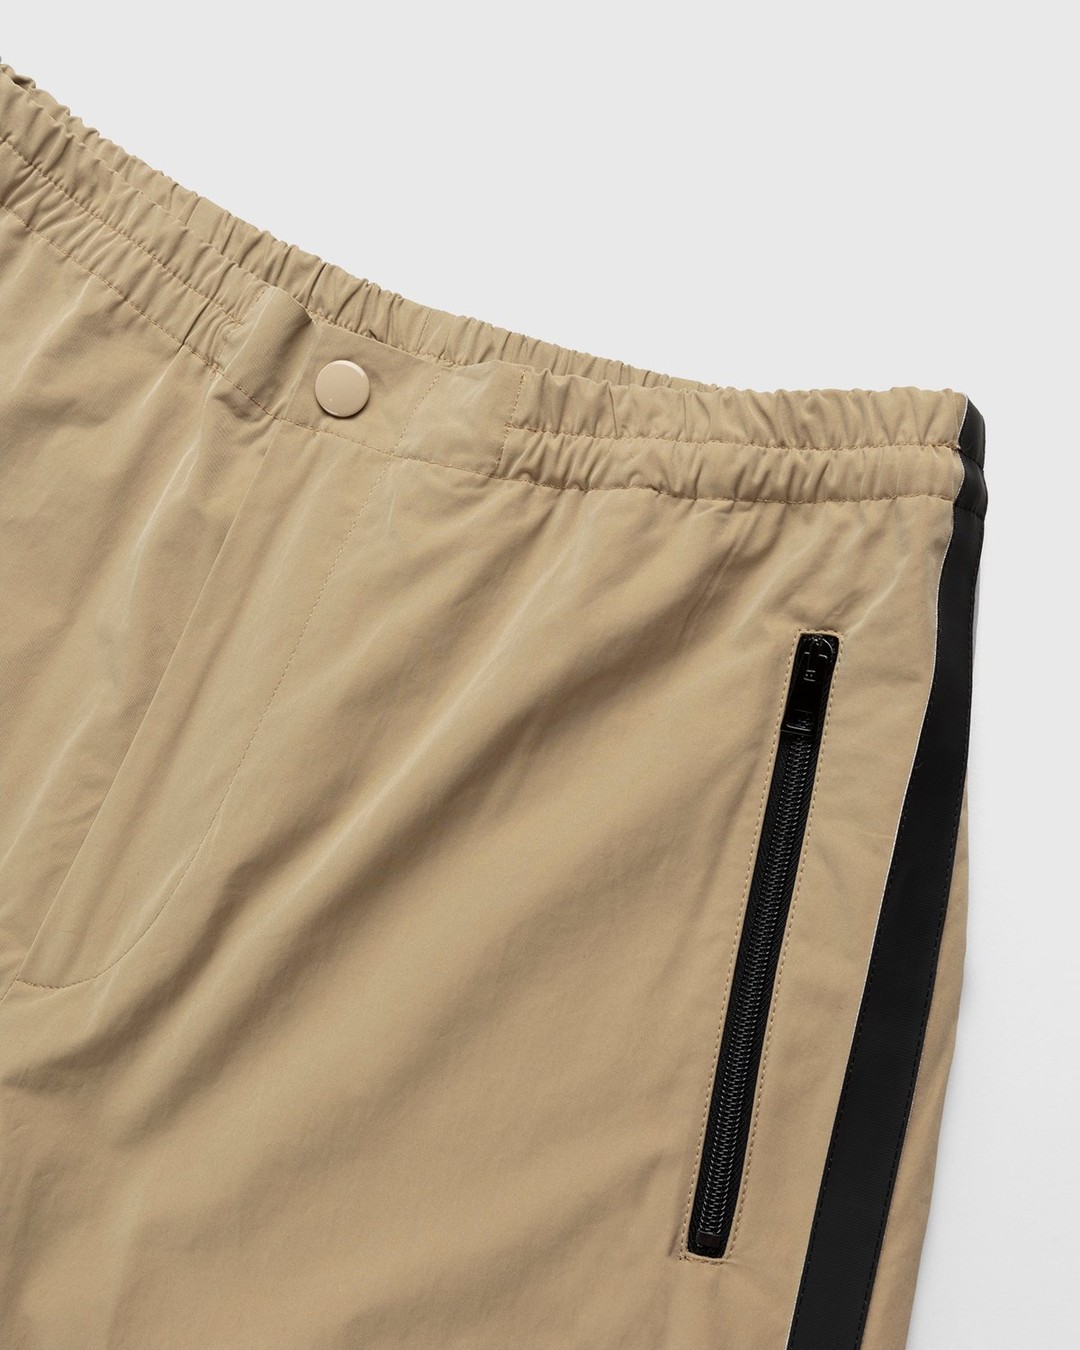 Dries van Noten – Palmer Tape Pants Beige - Trousers - Beige - Image 4